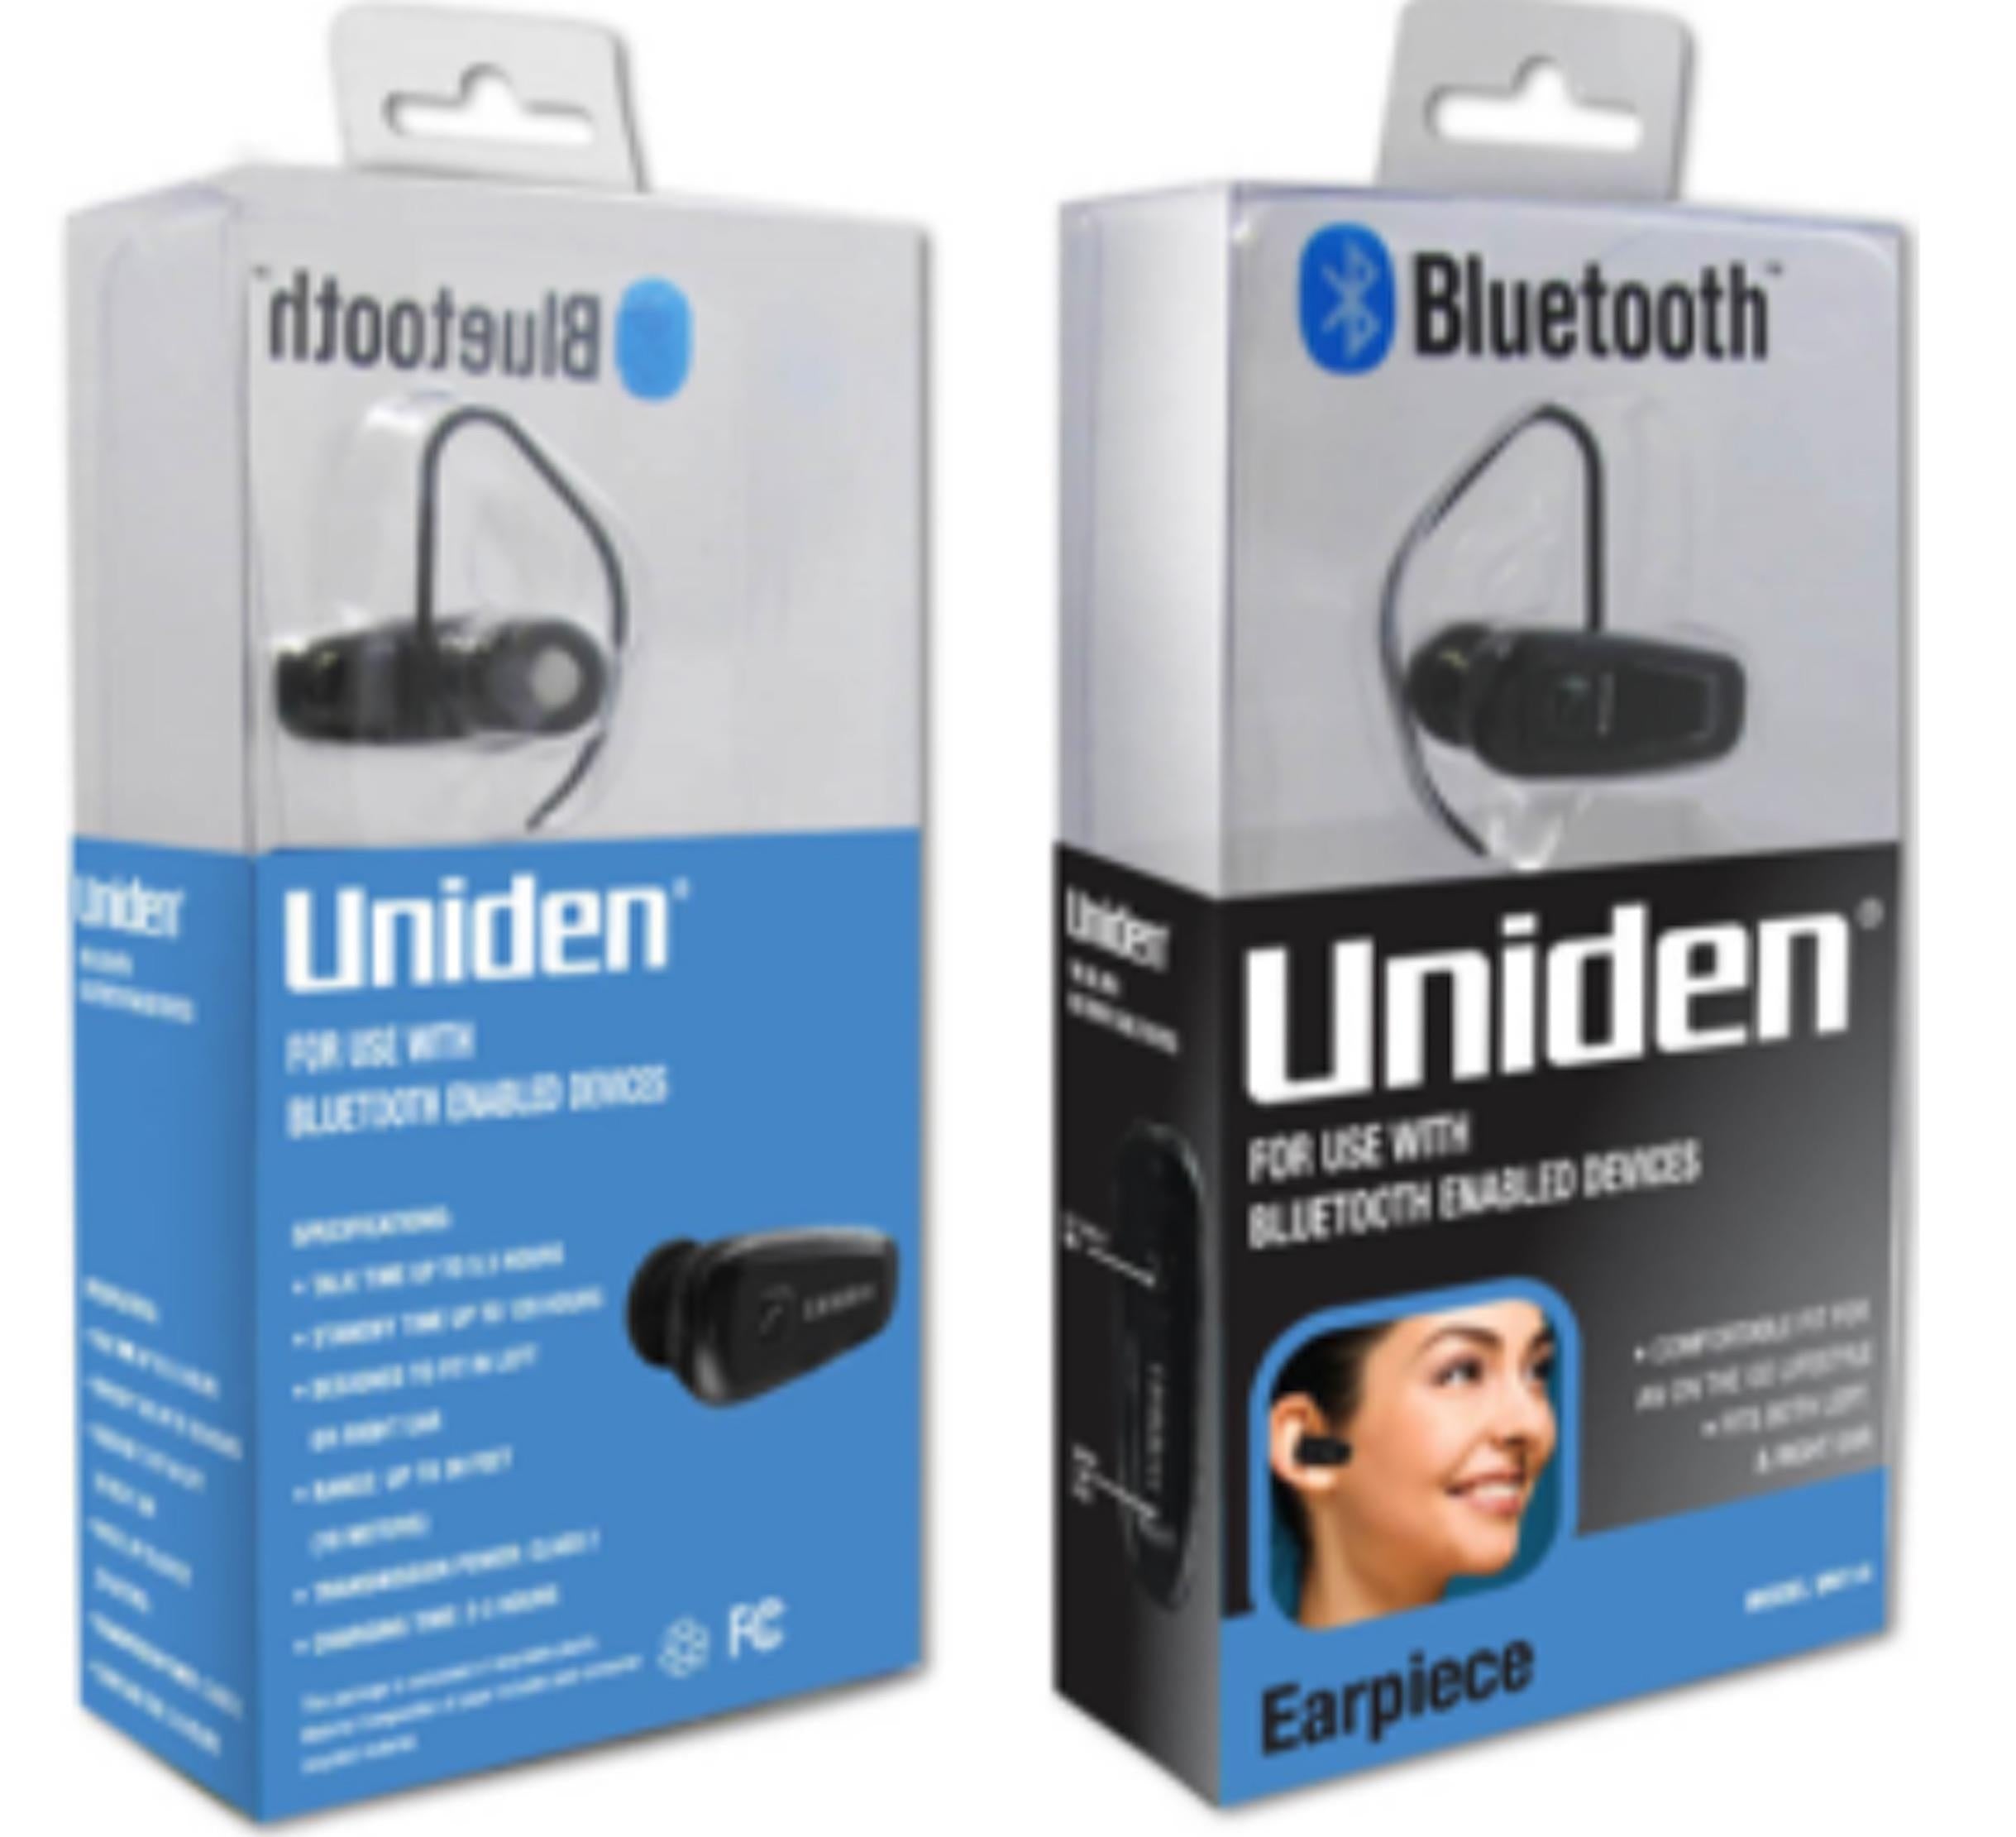 Uniden Bluetooth Earpiece